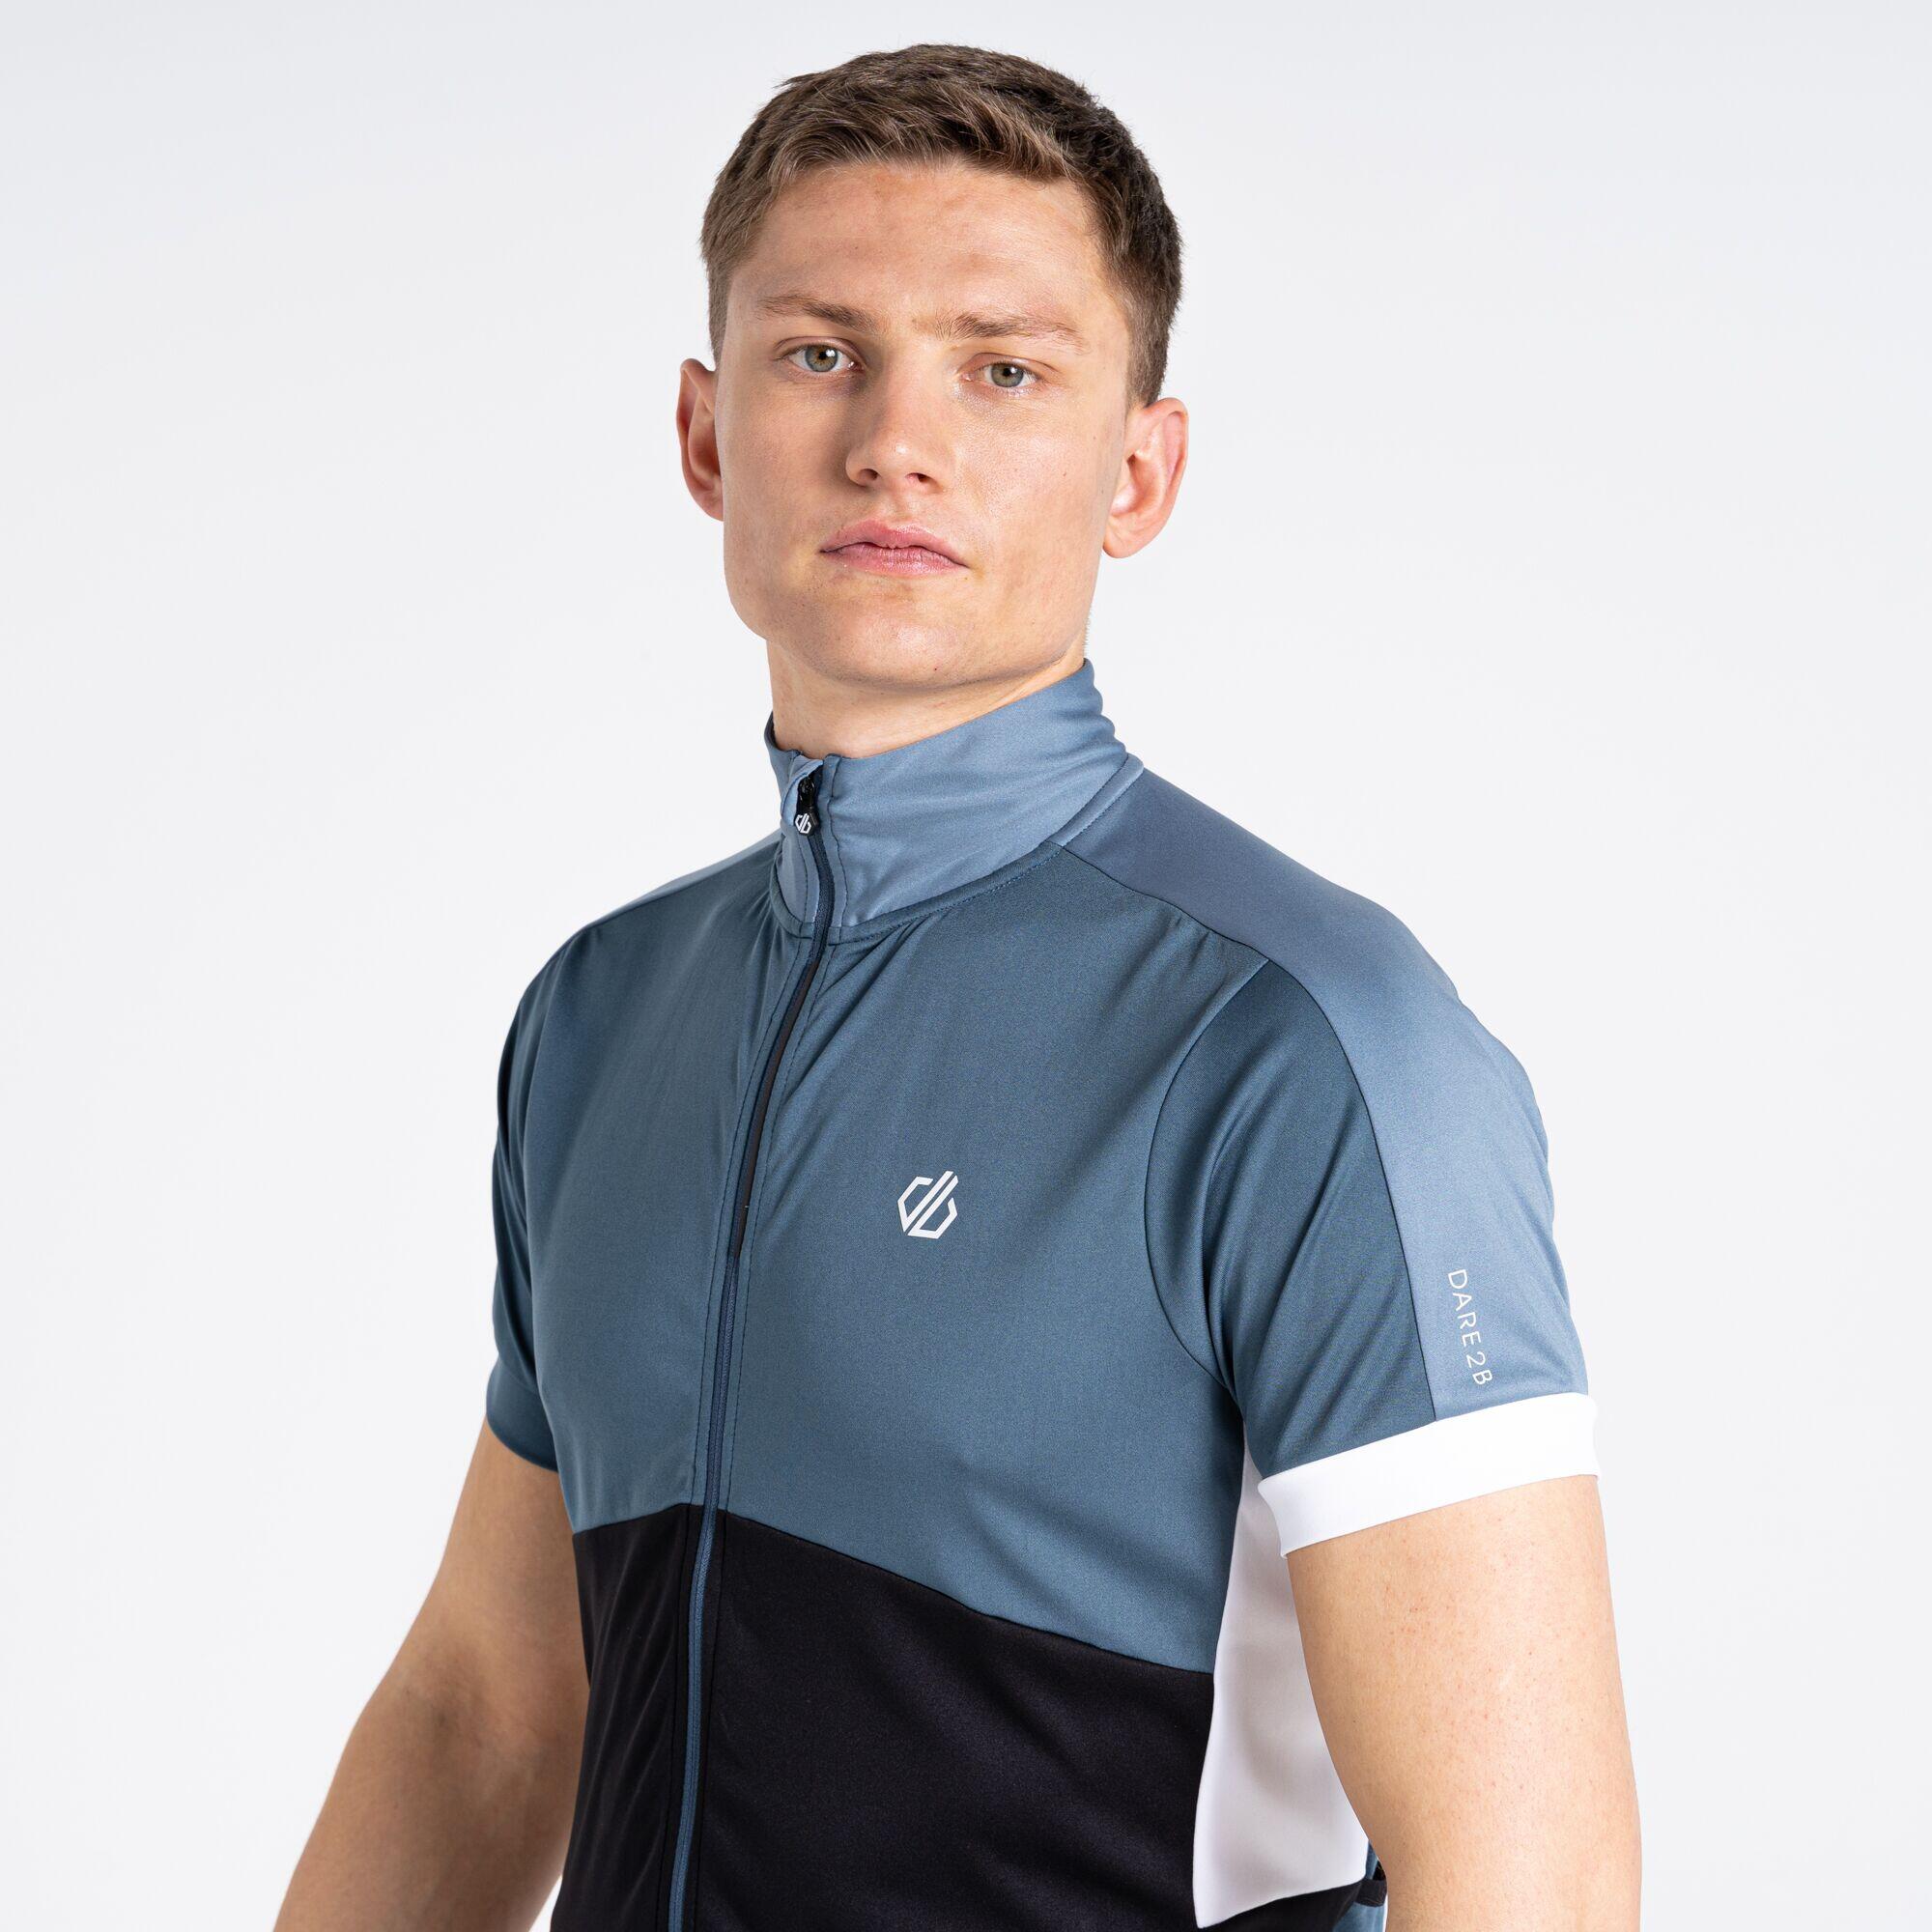 Protraction II Men's Cycling Full Zip Short Sleeve T-Shirt - Black / Grey 4/7